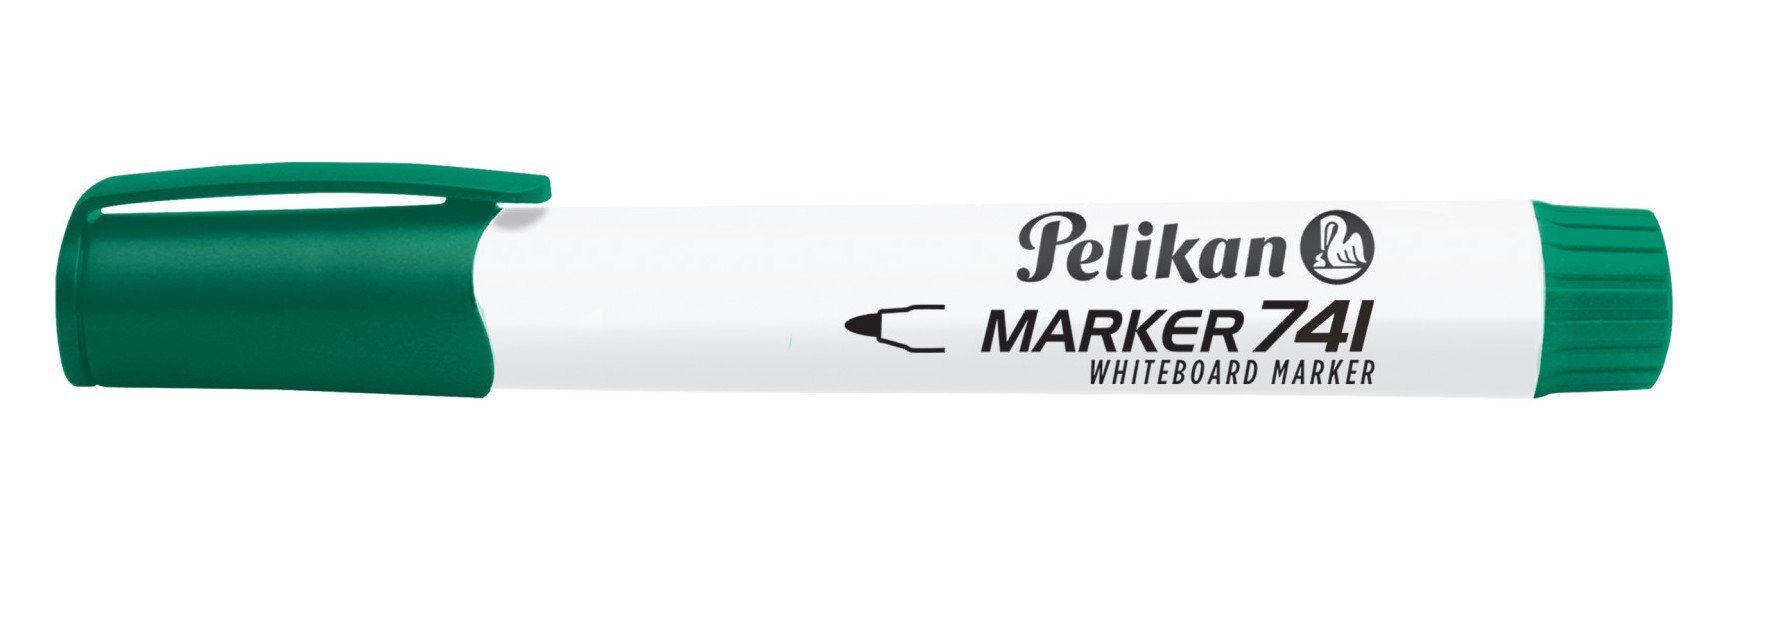 Whiteboard grün Pelikan Marker 741 Marker Pelikan